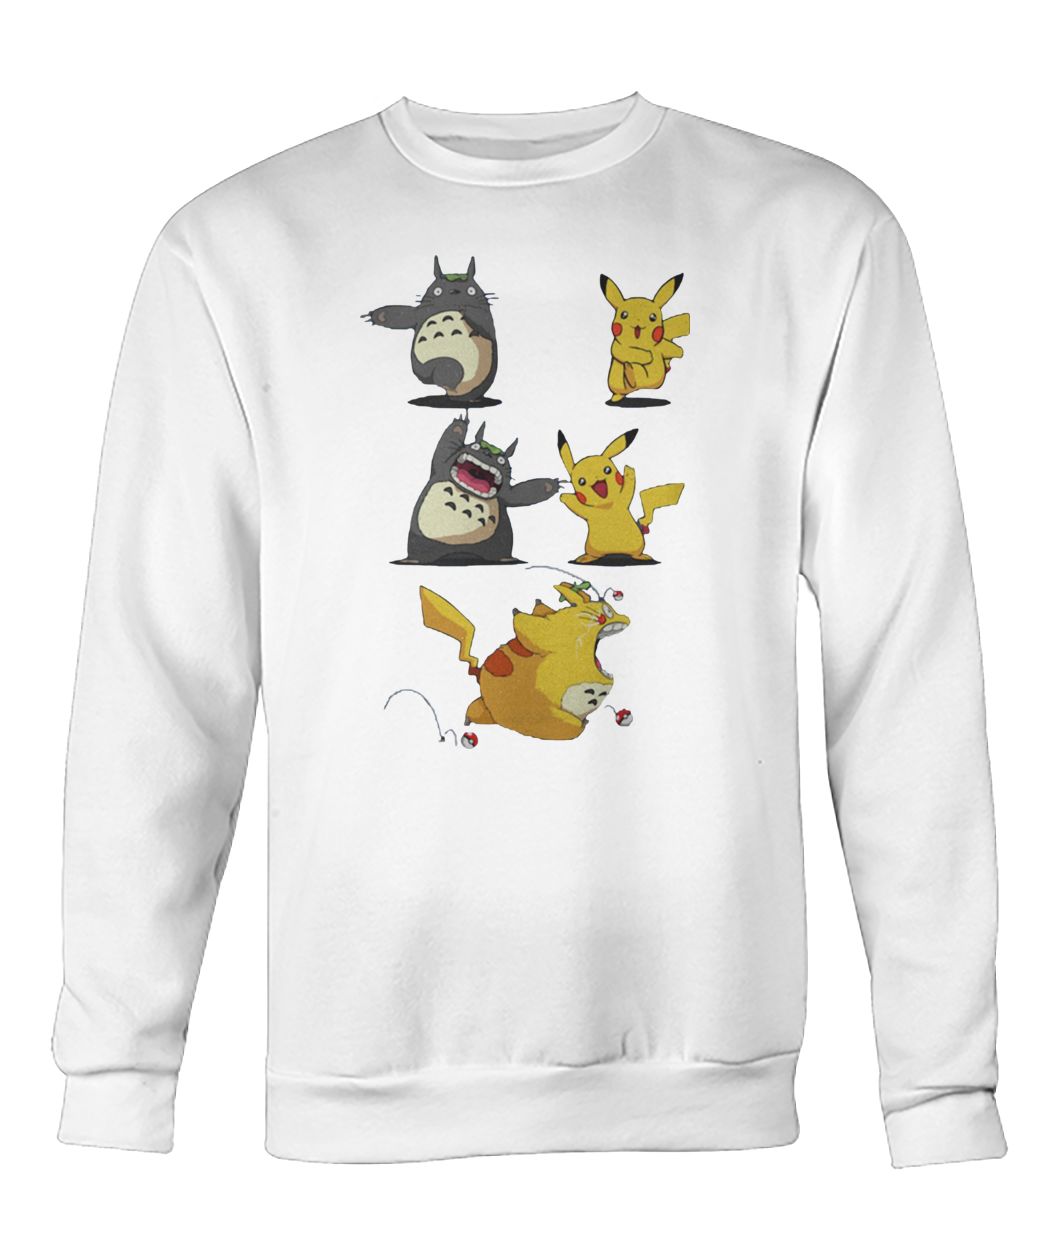 Pikachu fusion totoro became totochu or pikaro crew neck sweatshirt